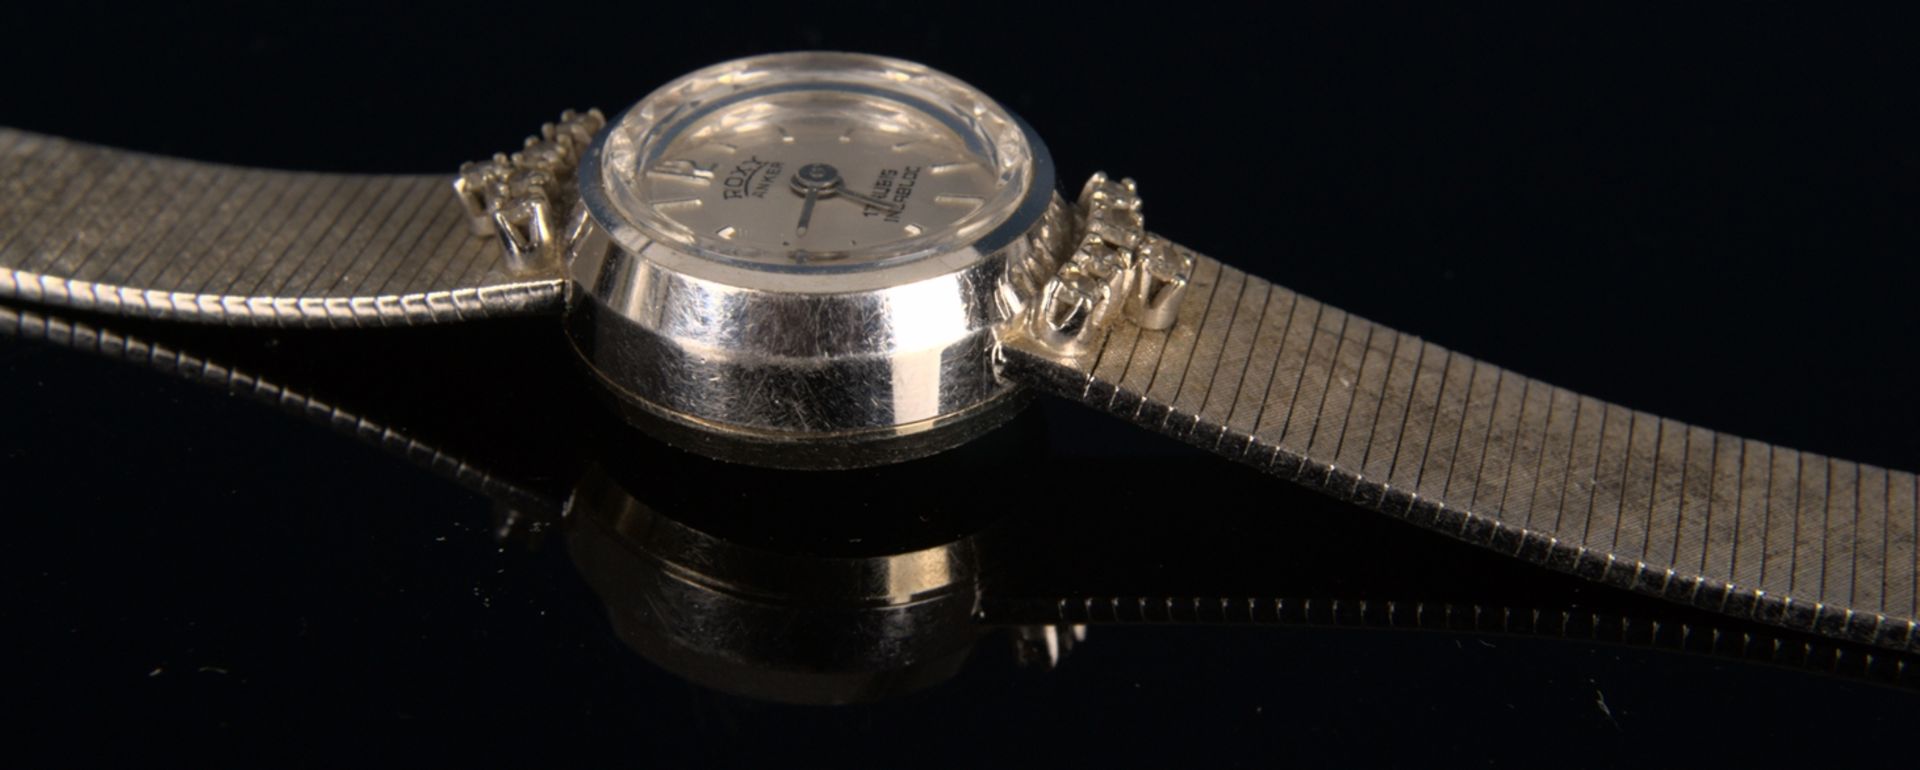 Elegante COCKTAIL - Damenarmbanduhr der Marke "ANKER - ROXY" - 17 Rubis - Incabloc. Handaufzug, - Bild 11 aus 11